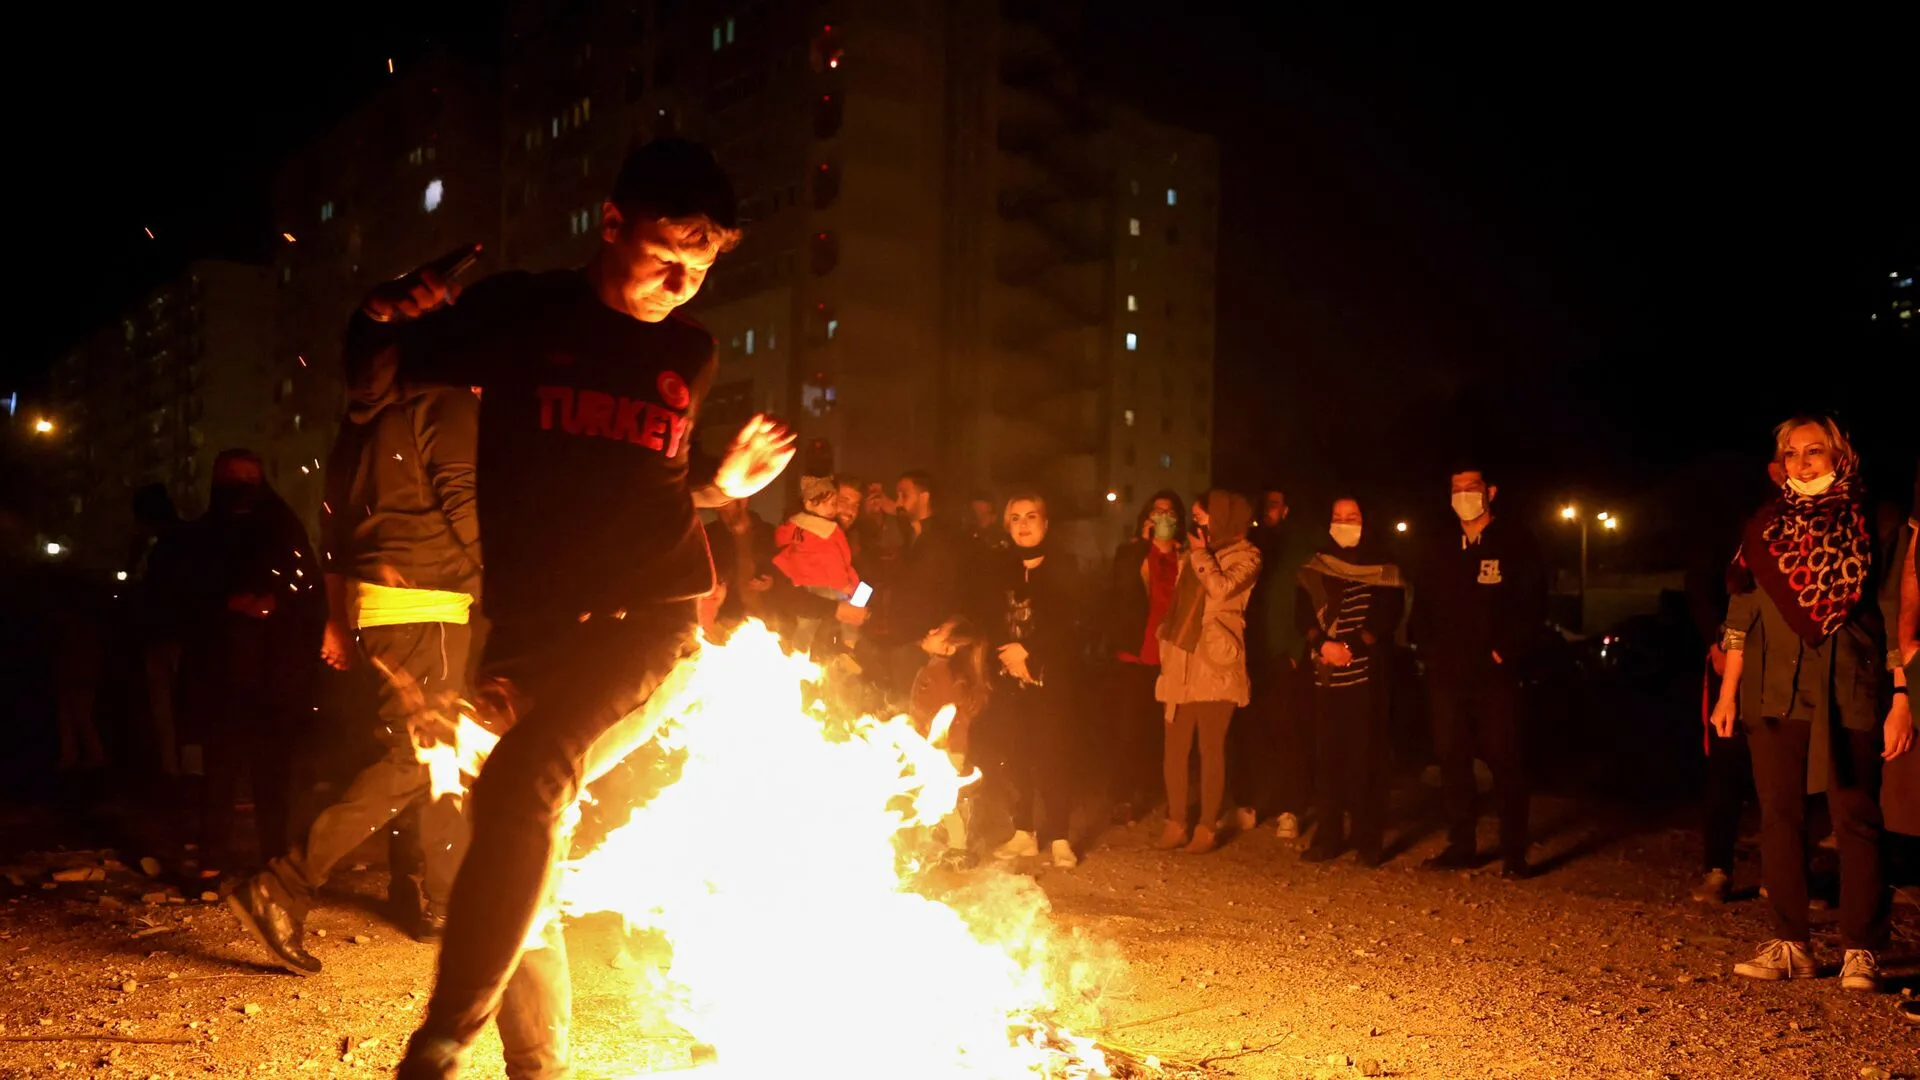 Чахаршанбе Сури праздник. Новруз байрам прыжки через костер. Праздник огня. Праздник огня в Азербайджане. Сильный жар ночью